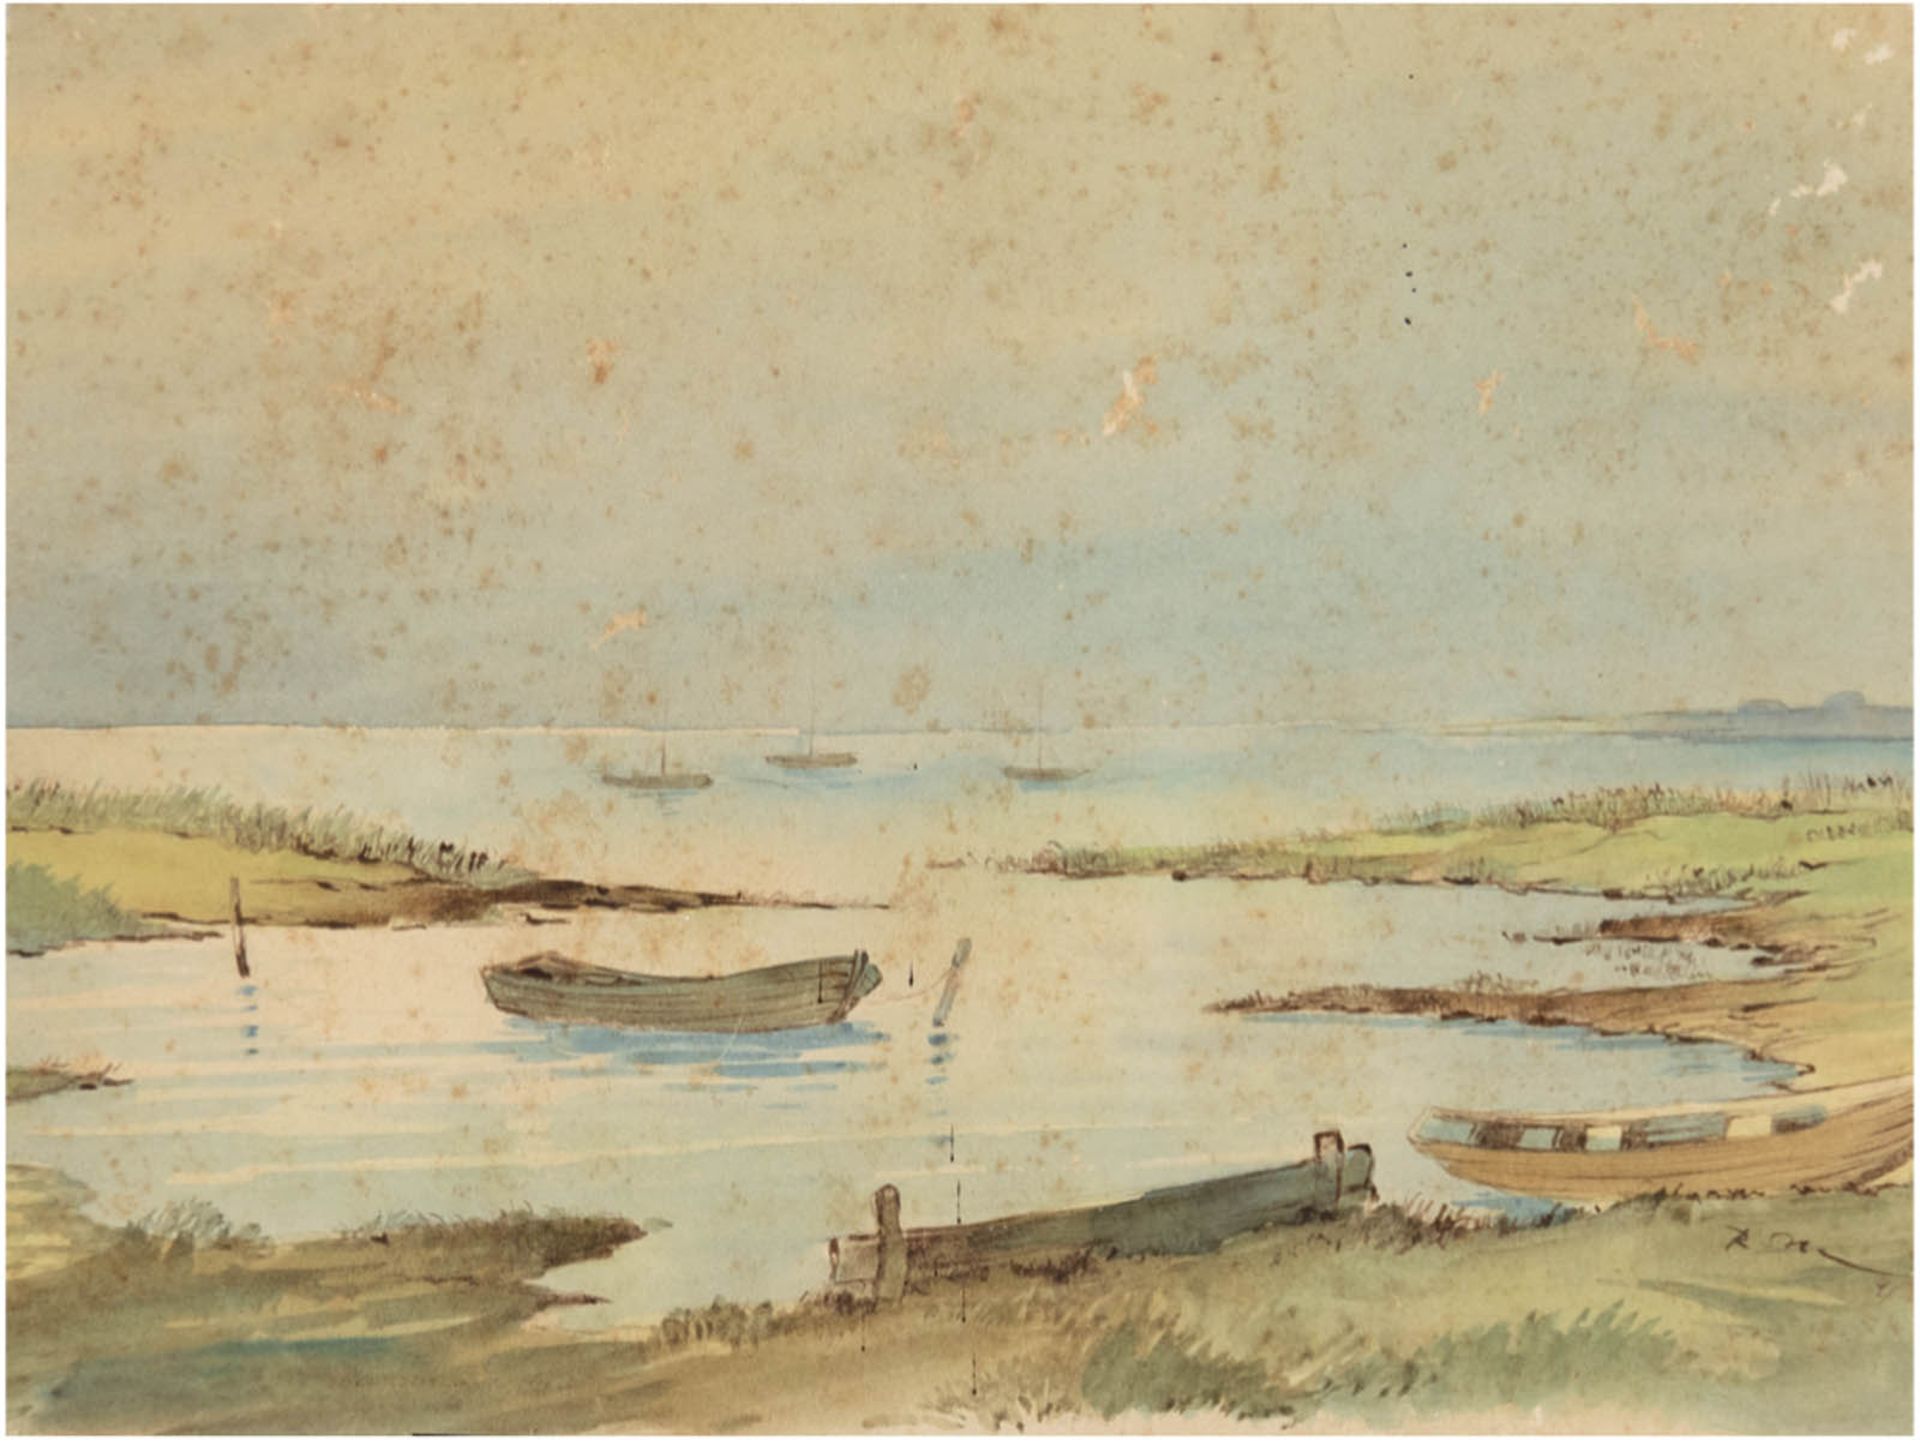 "Ruderboote am Ufer", Aquarell/Papier, undeutl. sign. u.r., leicht stockfleckig, 21,5x28,5 cm